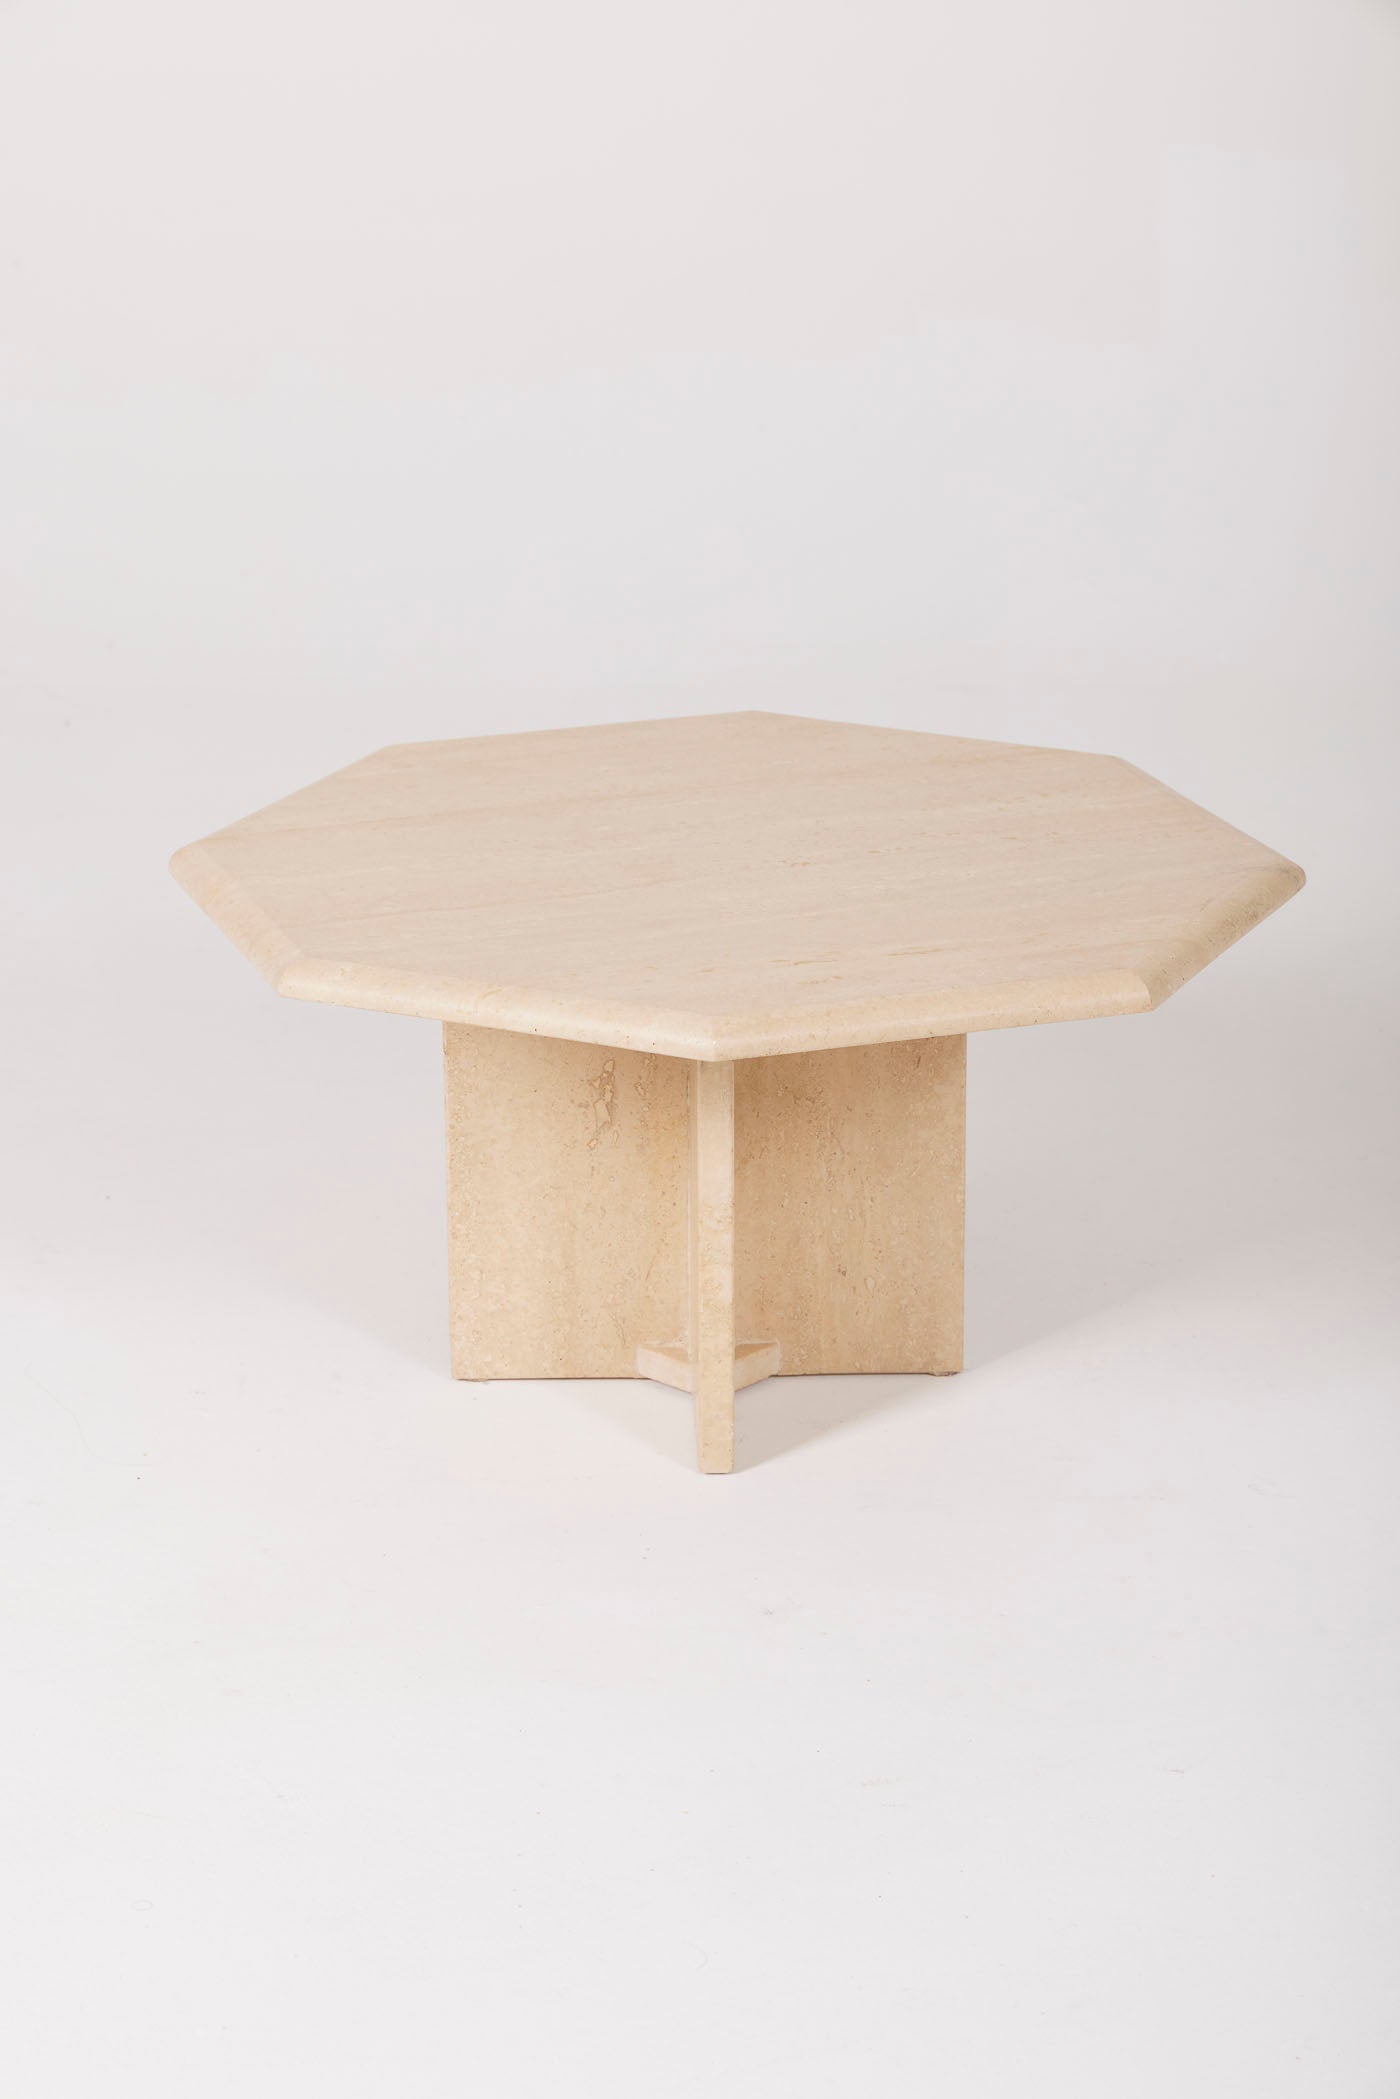 Octagonal travertine coffee table